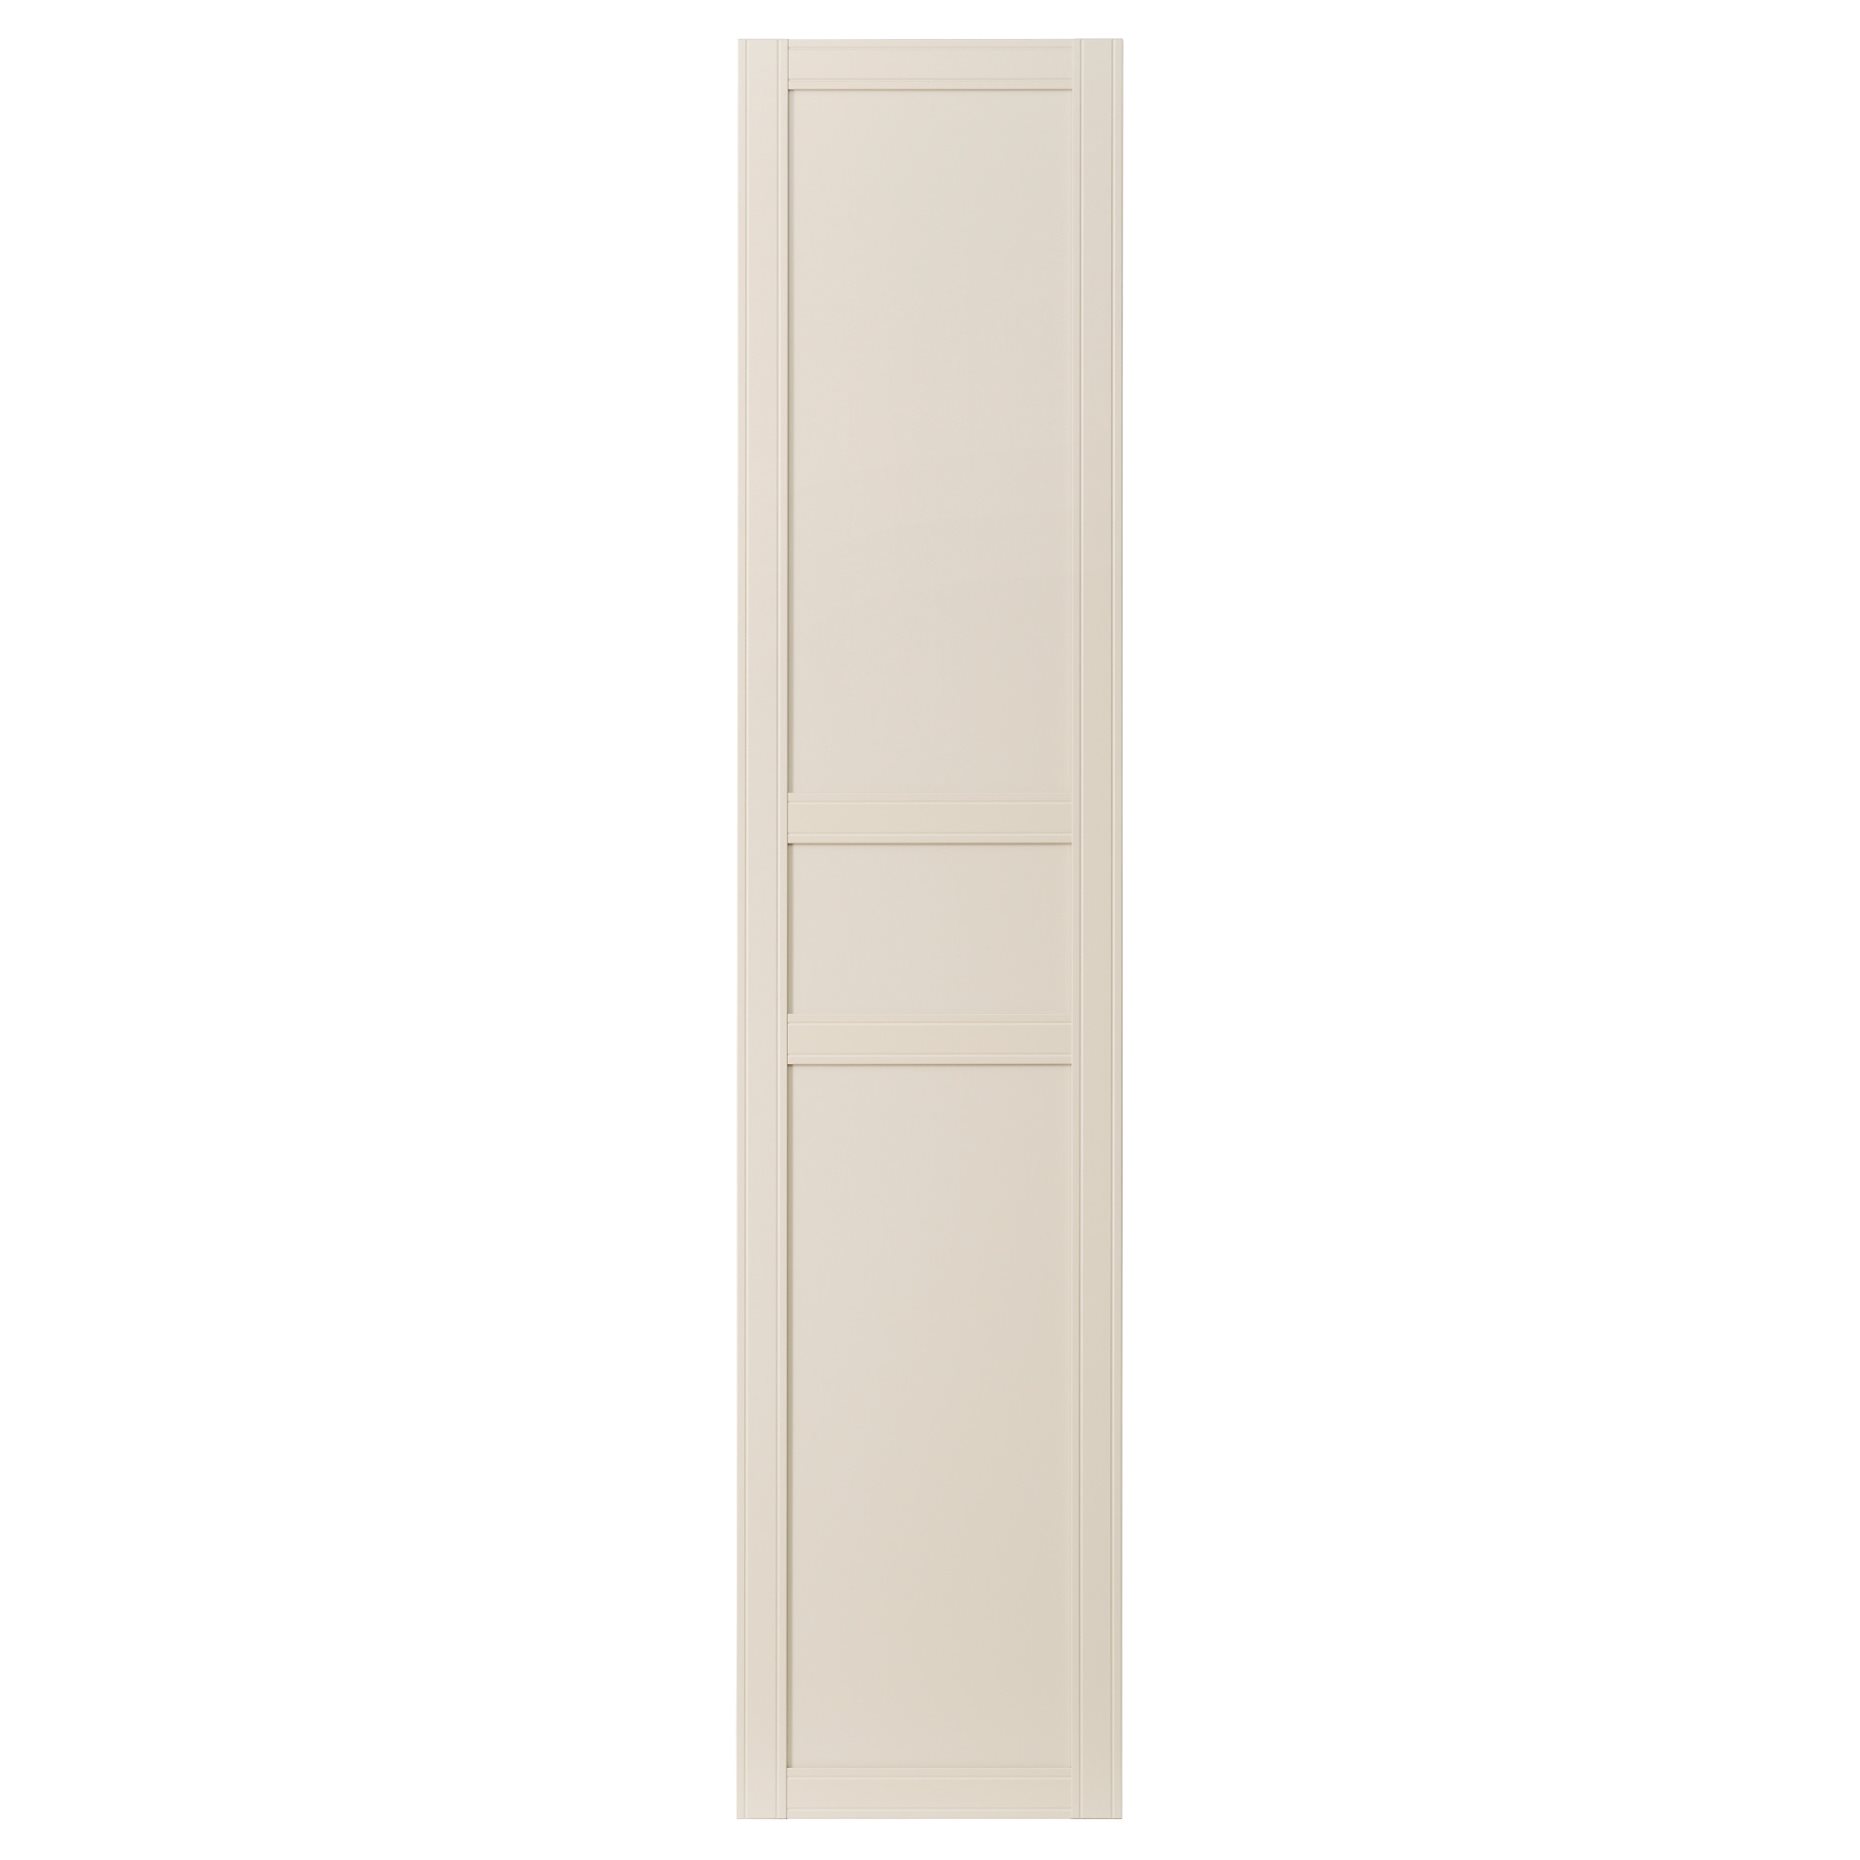 FLISBERGET, πόρτα με μεντεσέδες, 50x195 cm, 391.810.66